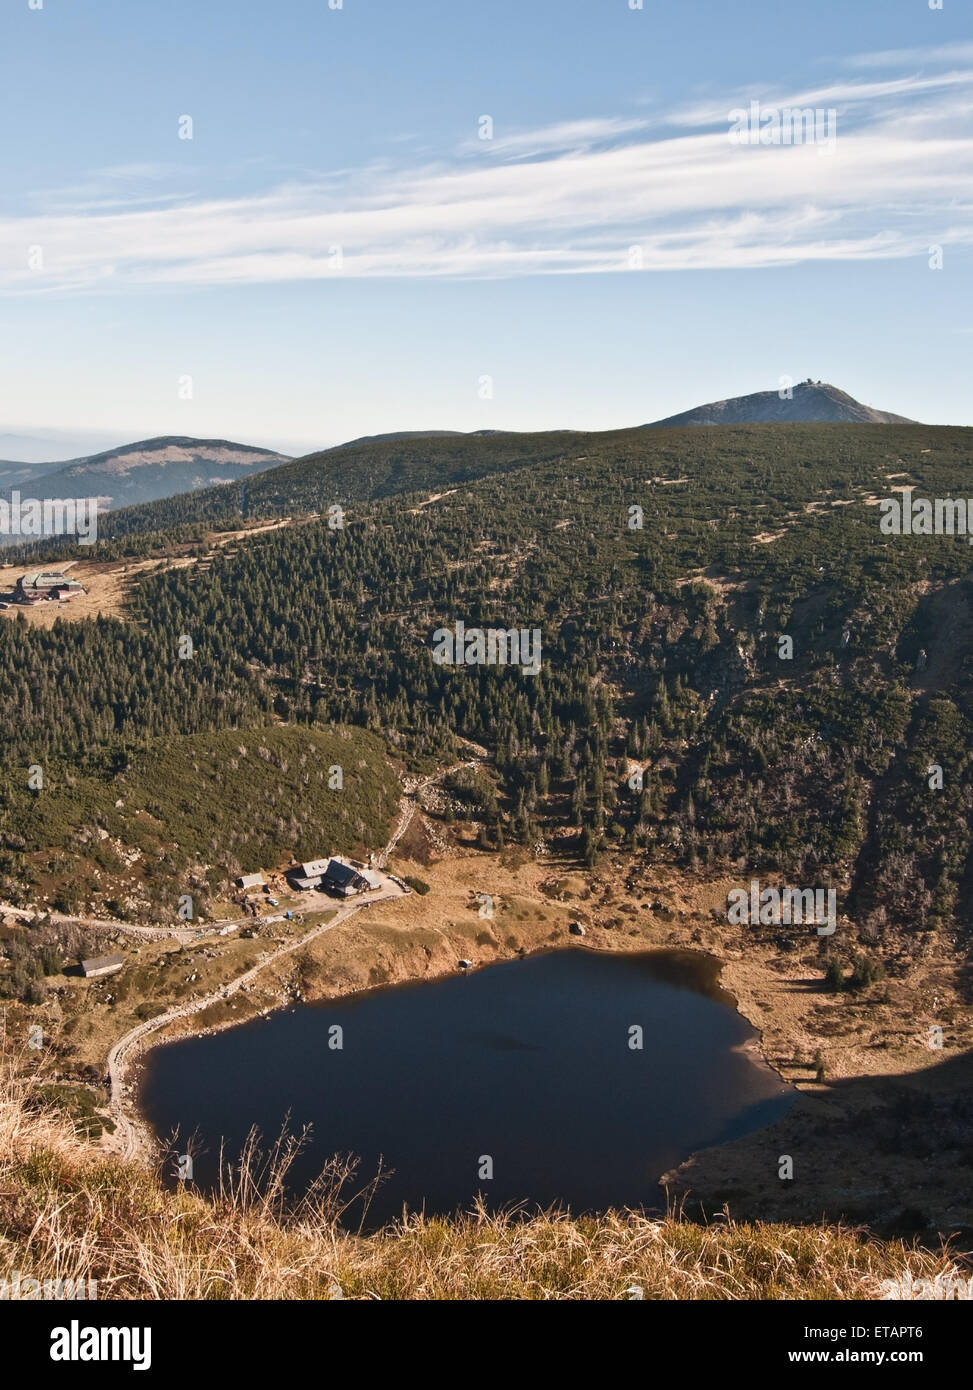 Maly Staw lake with Sneizka hill on the background in Karkonosze mountains Stock Photo